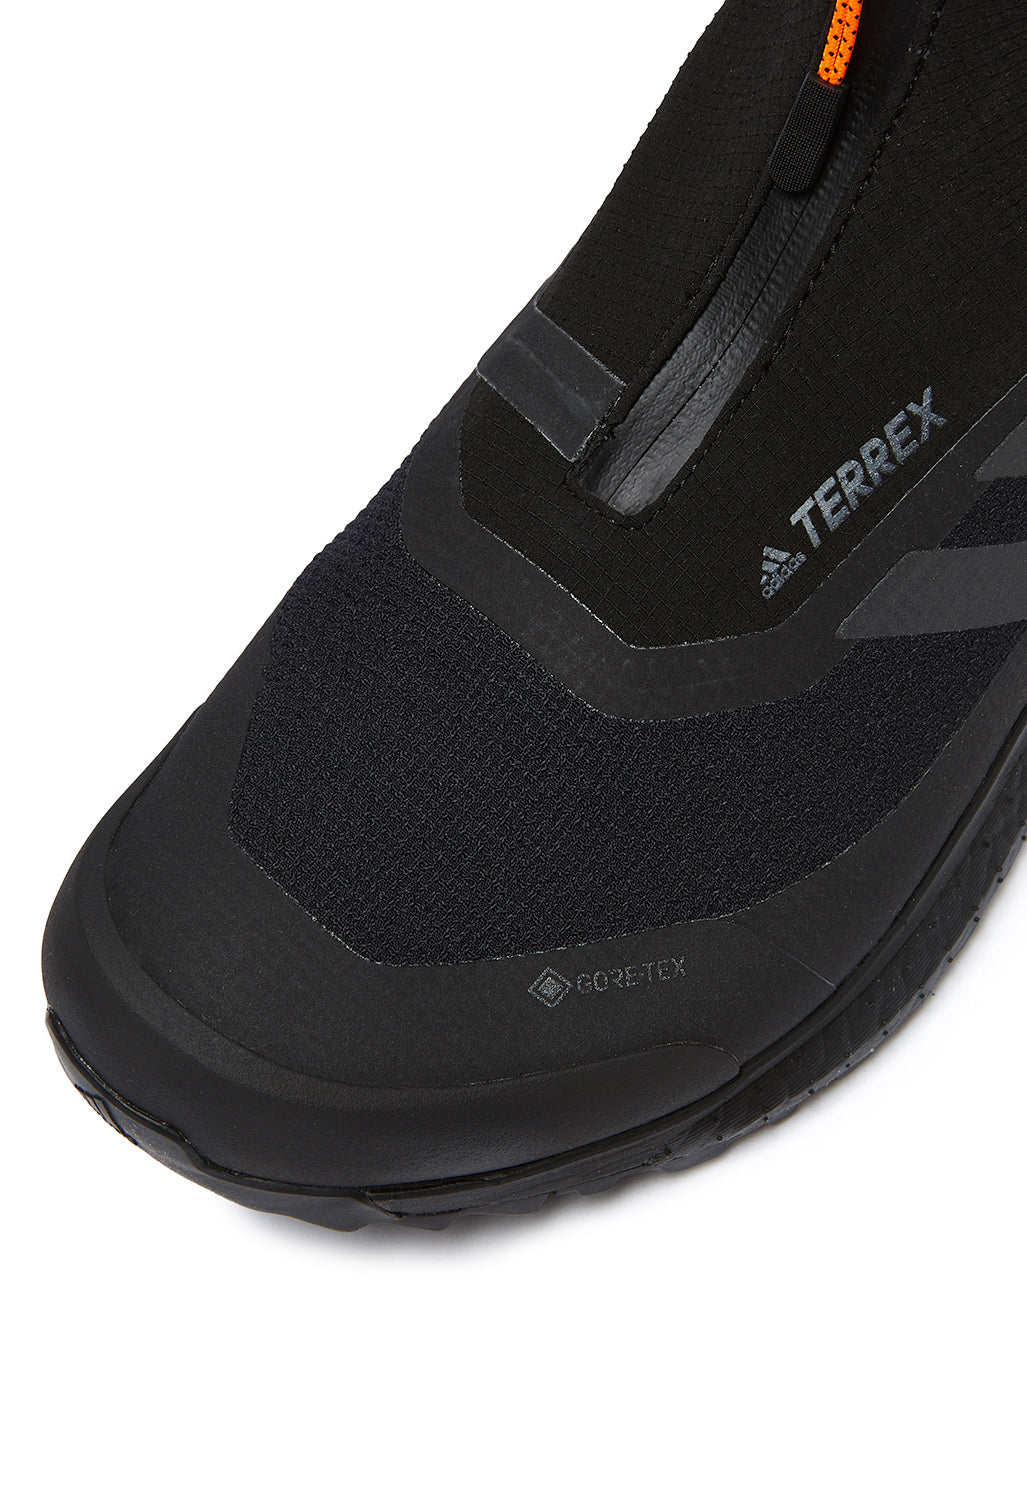 adidas Terrex Free Hiker COLD.RDY Men's Boots - Core Black/Core Black/Orange